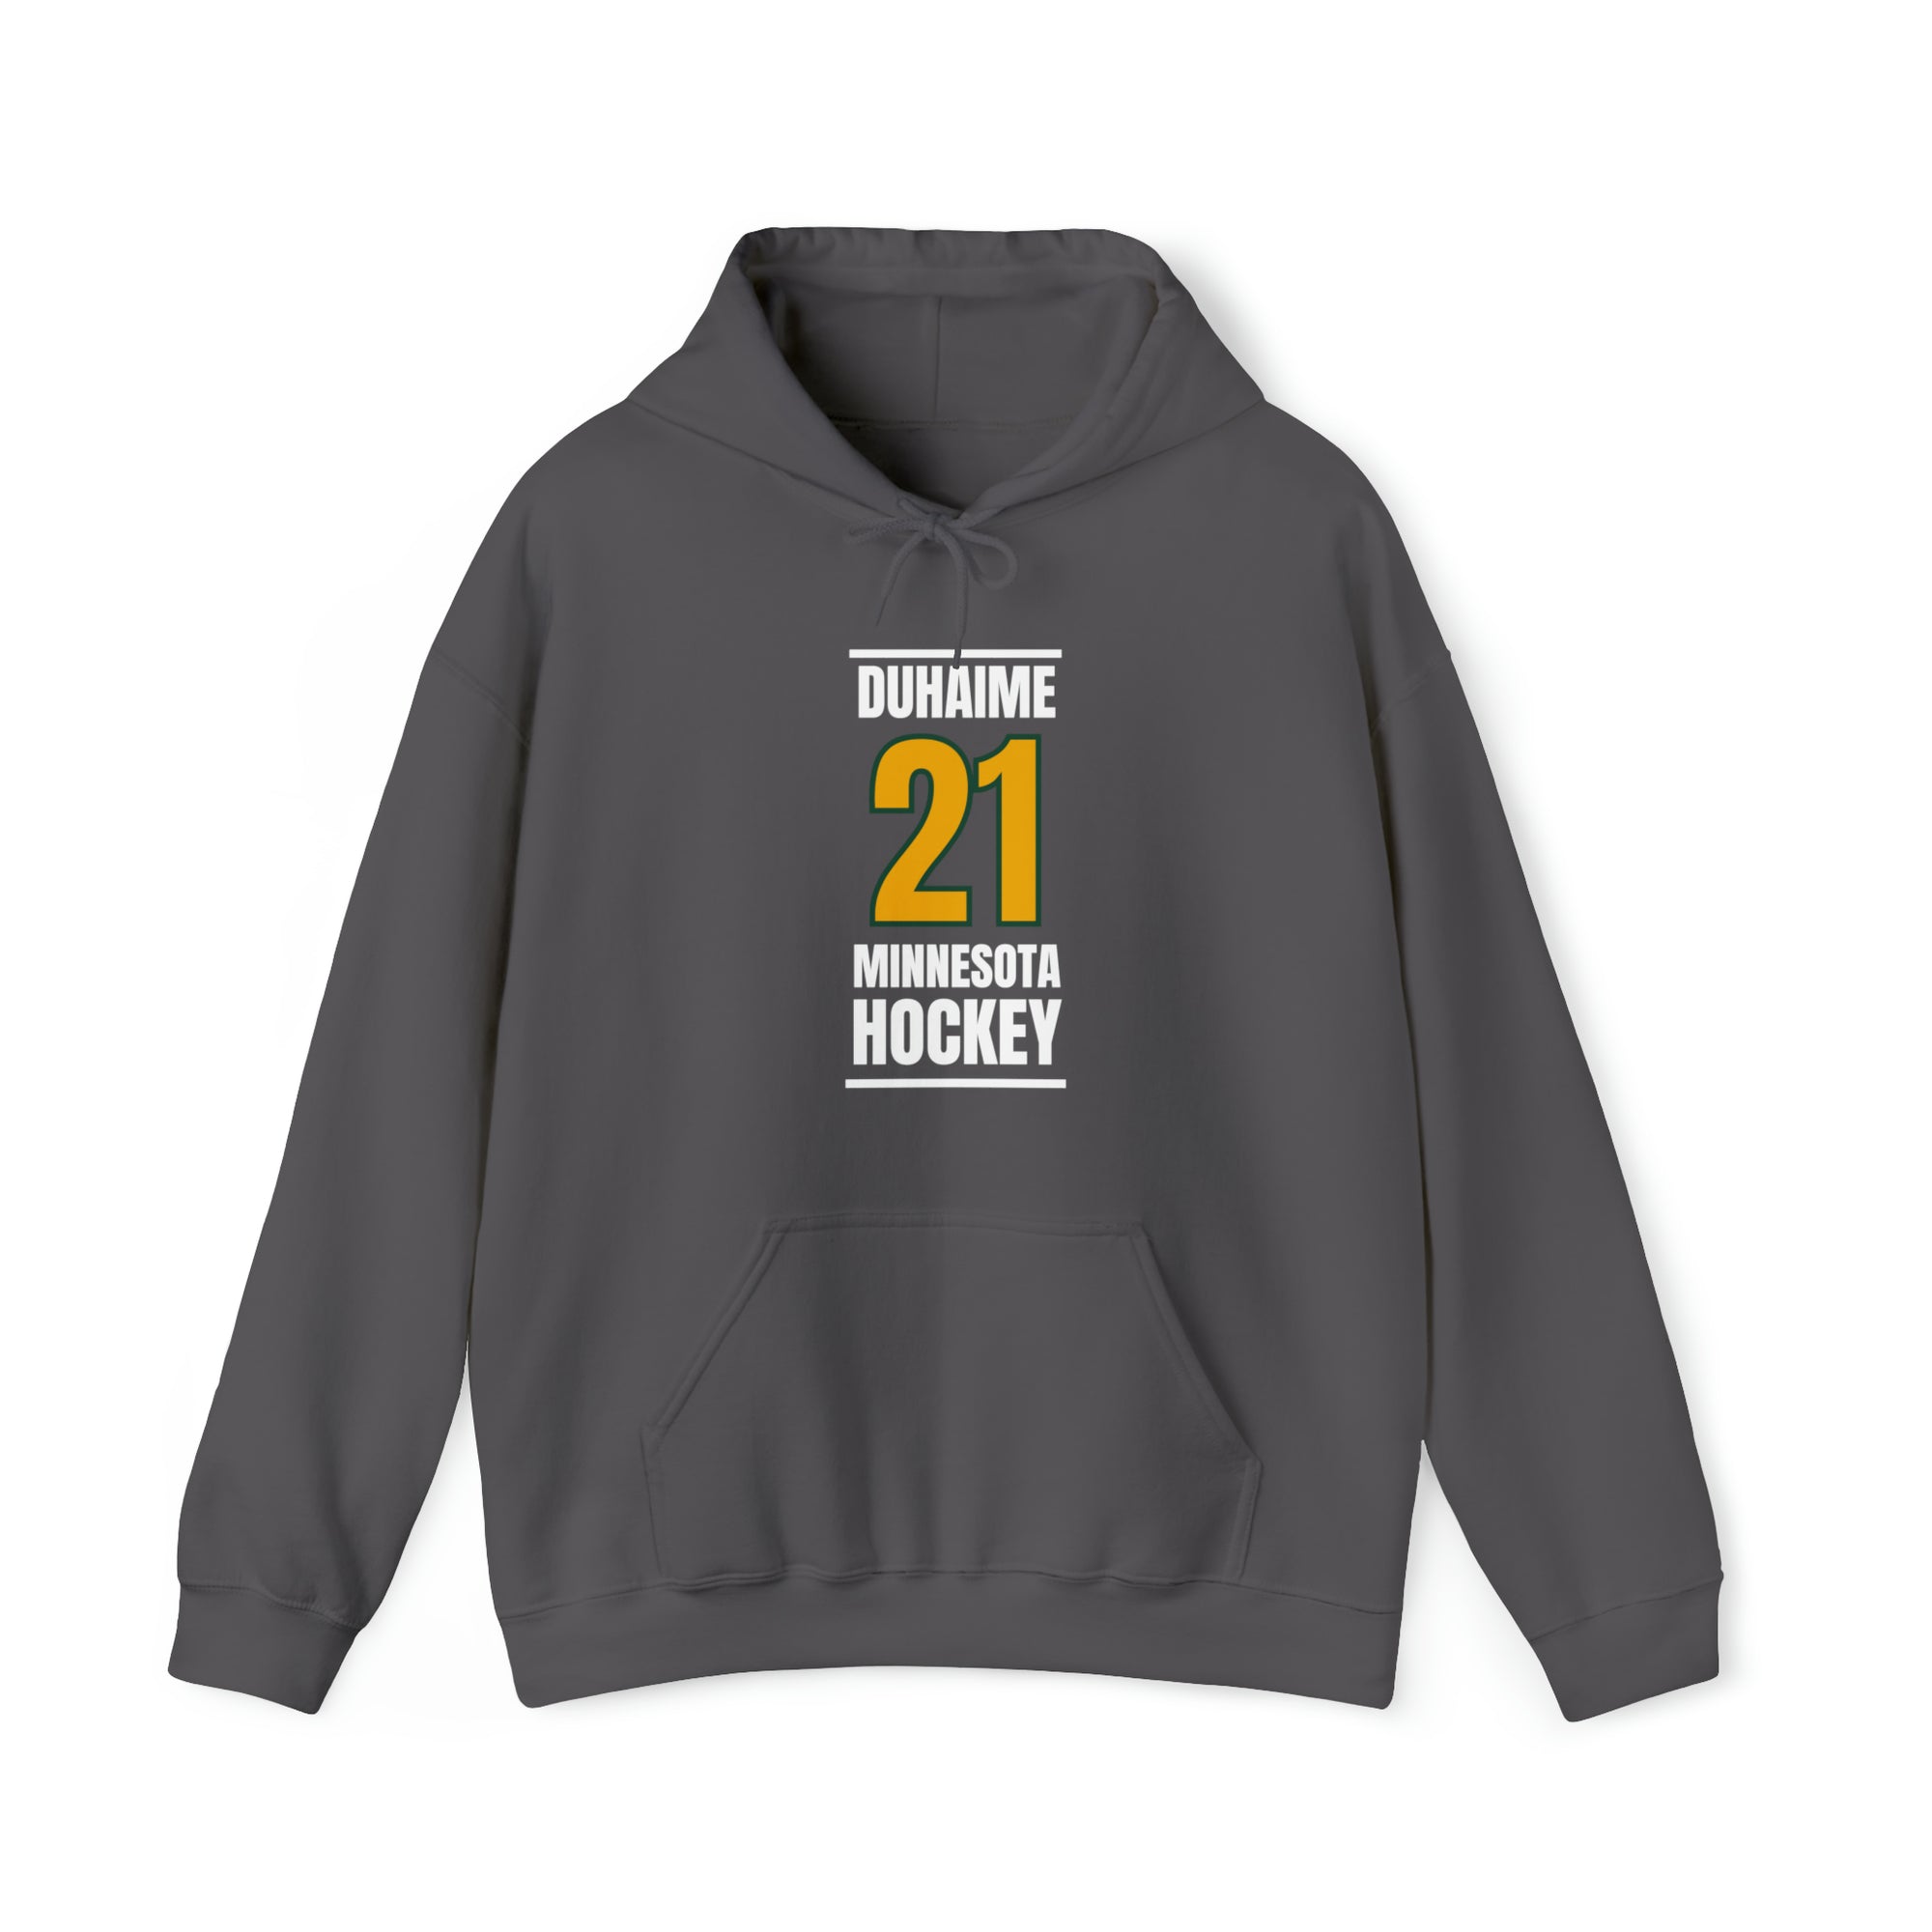 Duhaime 21 Minnesota Hockey Gold Vertical Design Unisex Hooded Sweatshirt